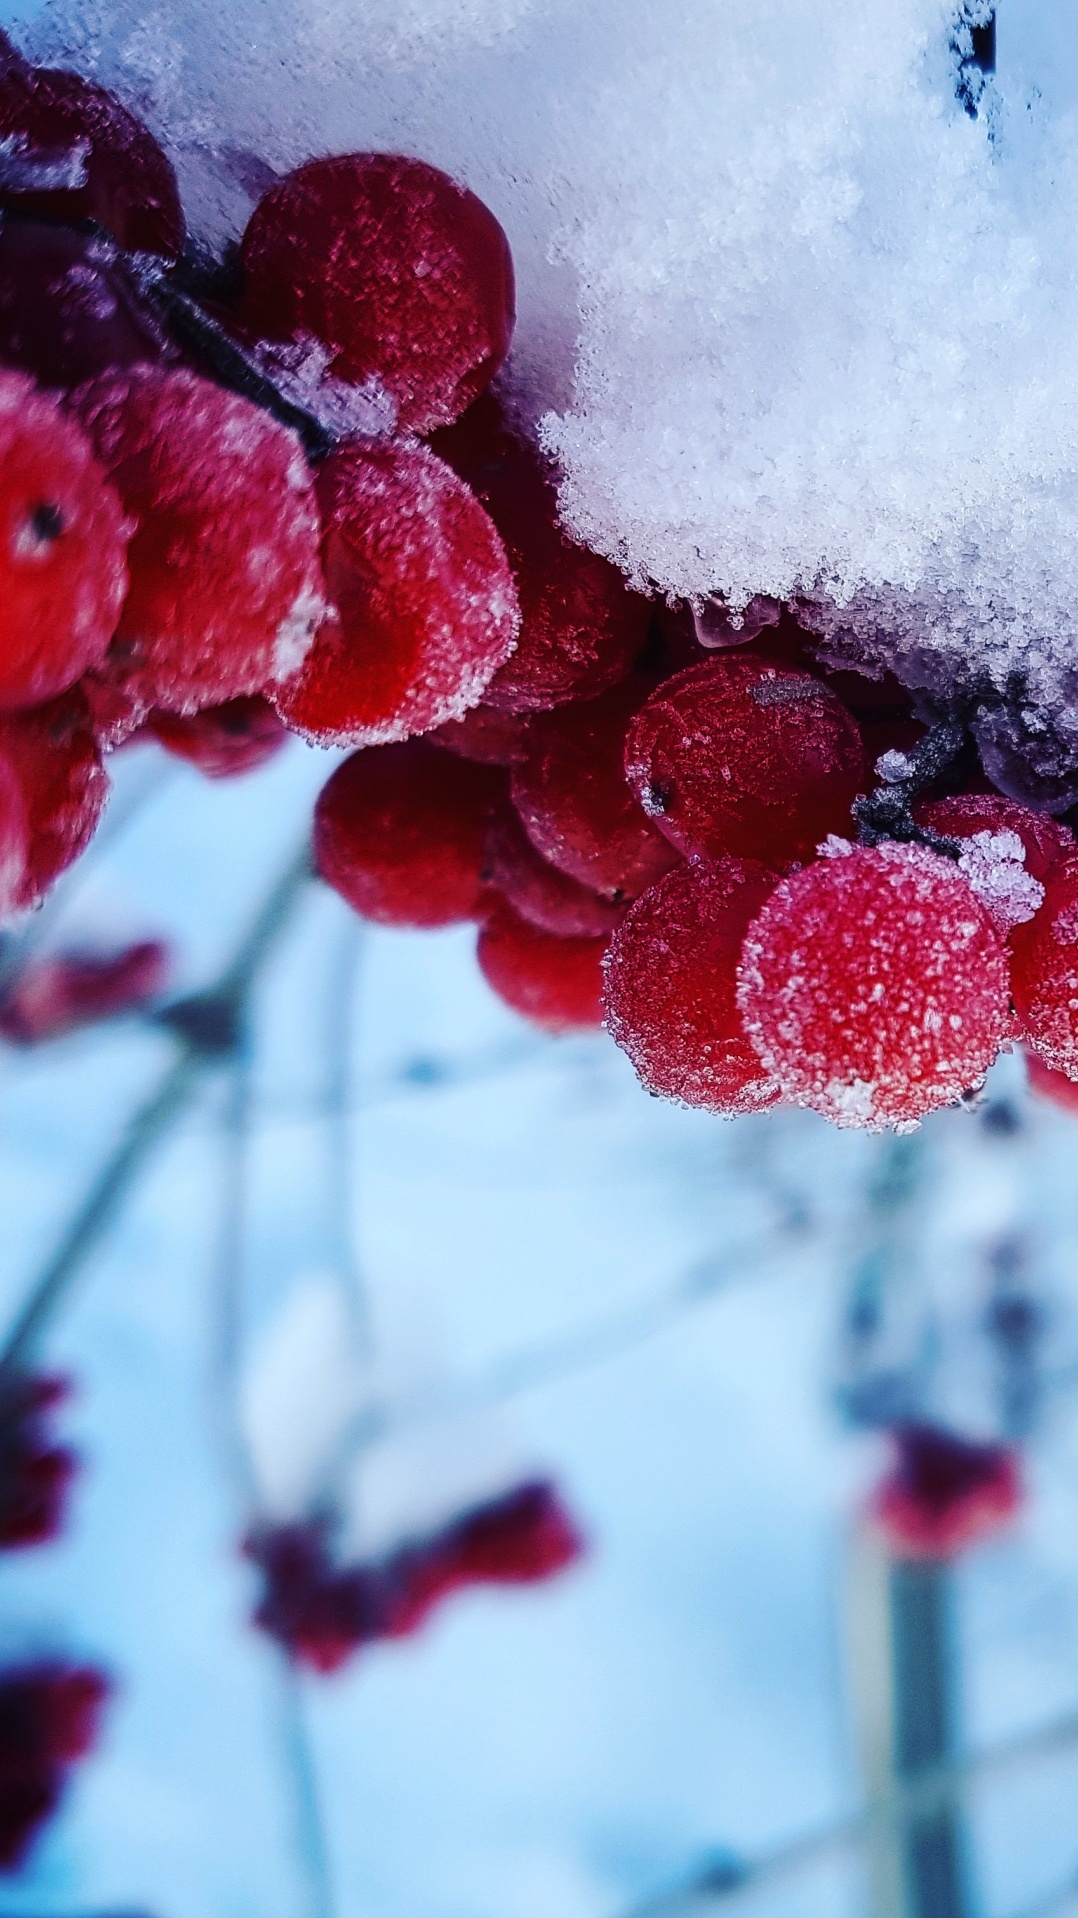 снег, ягоды, фрукты, зима, простуда